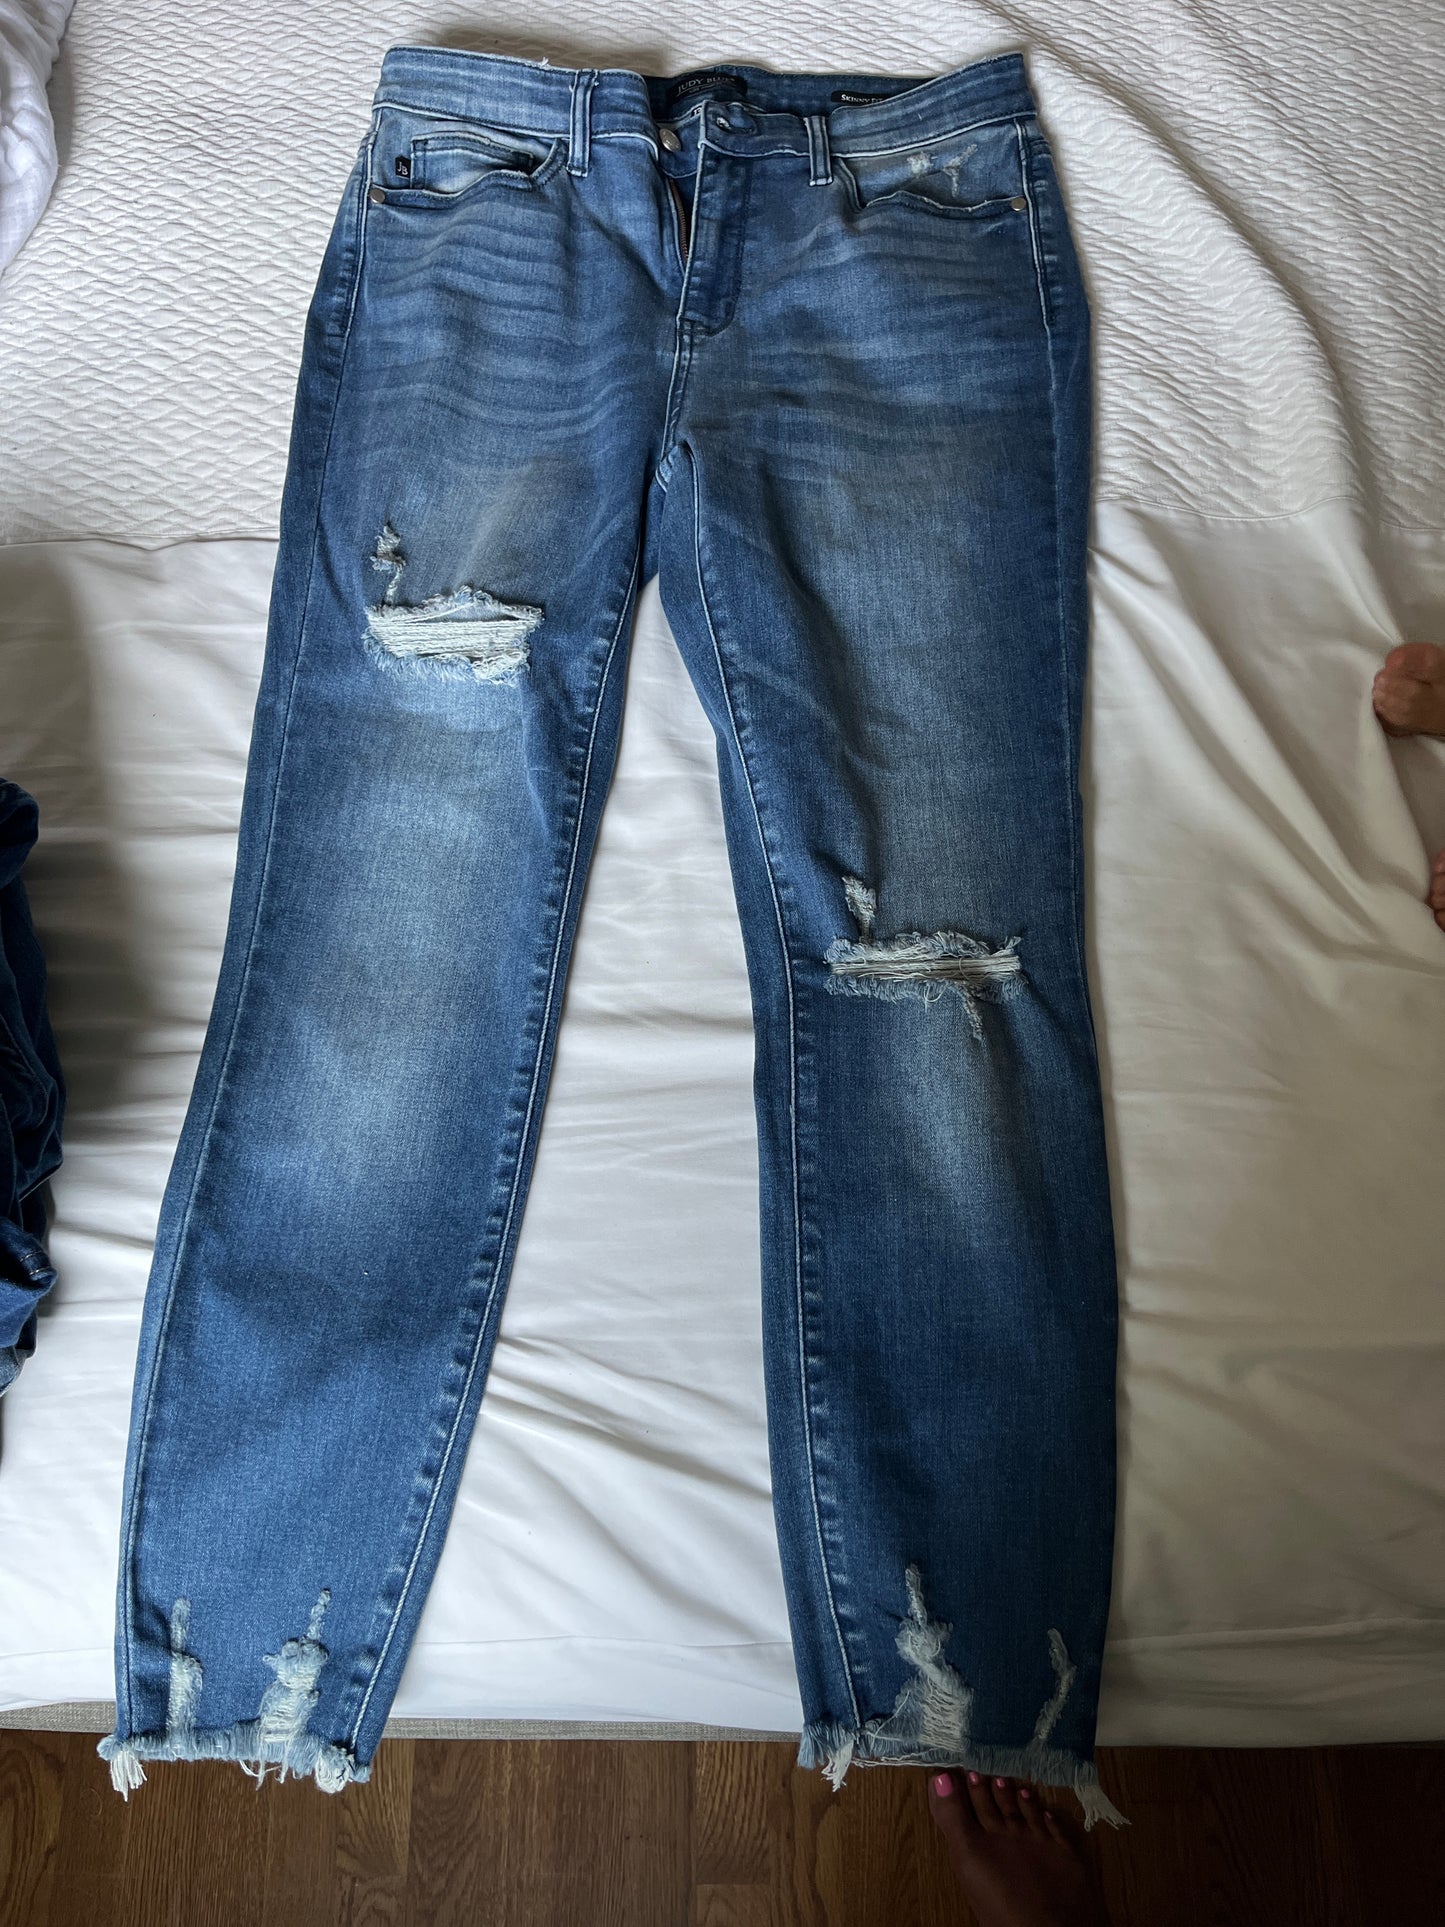 13/31 Judy blue jeans (skinny)